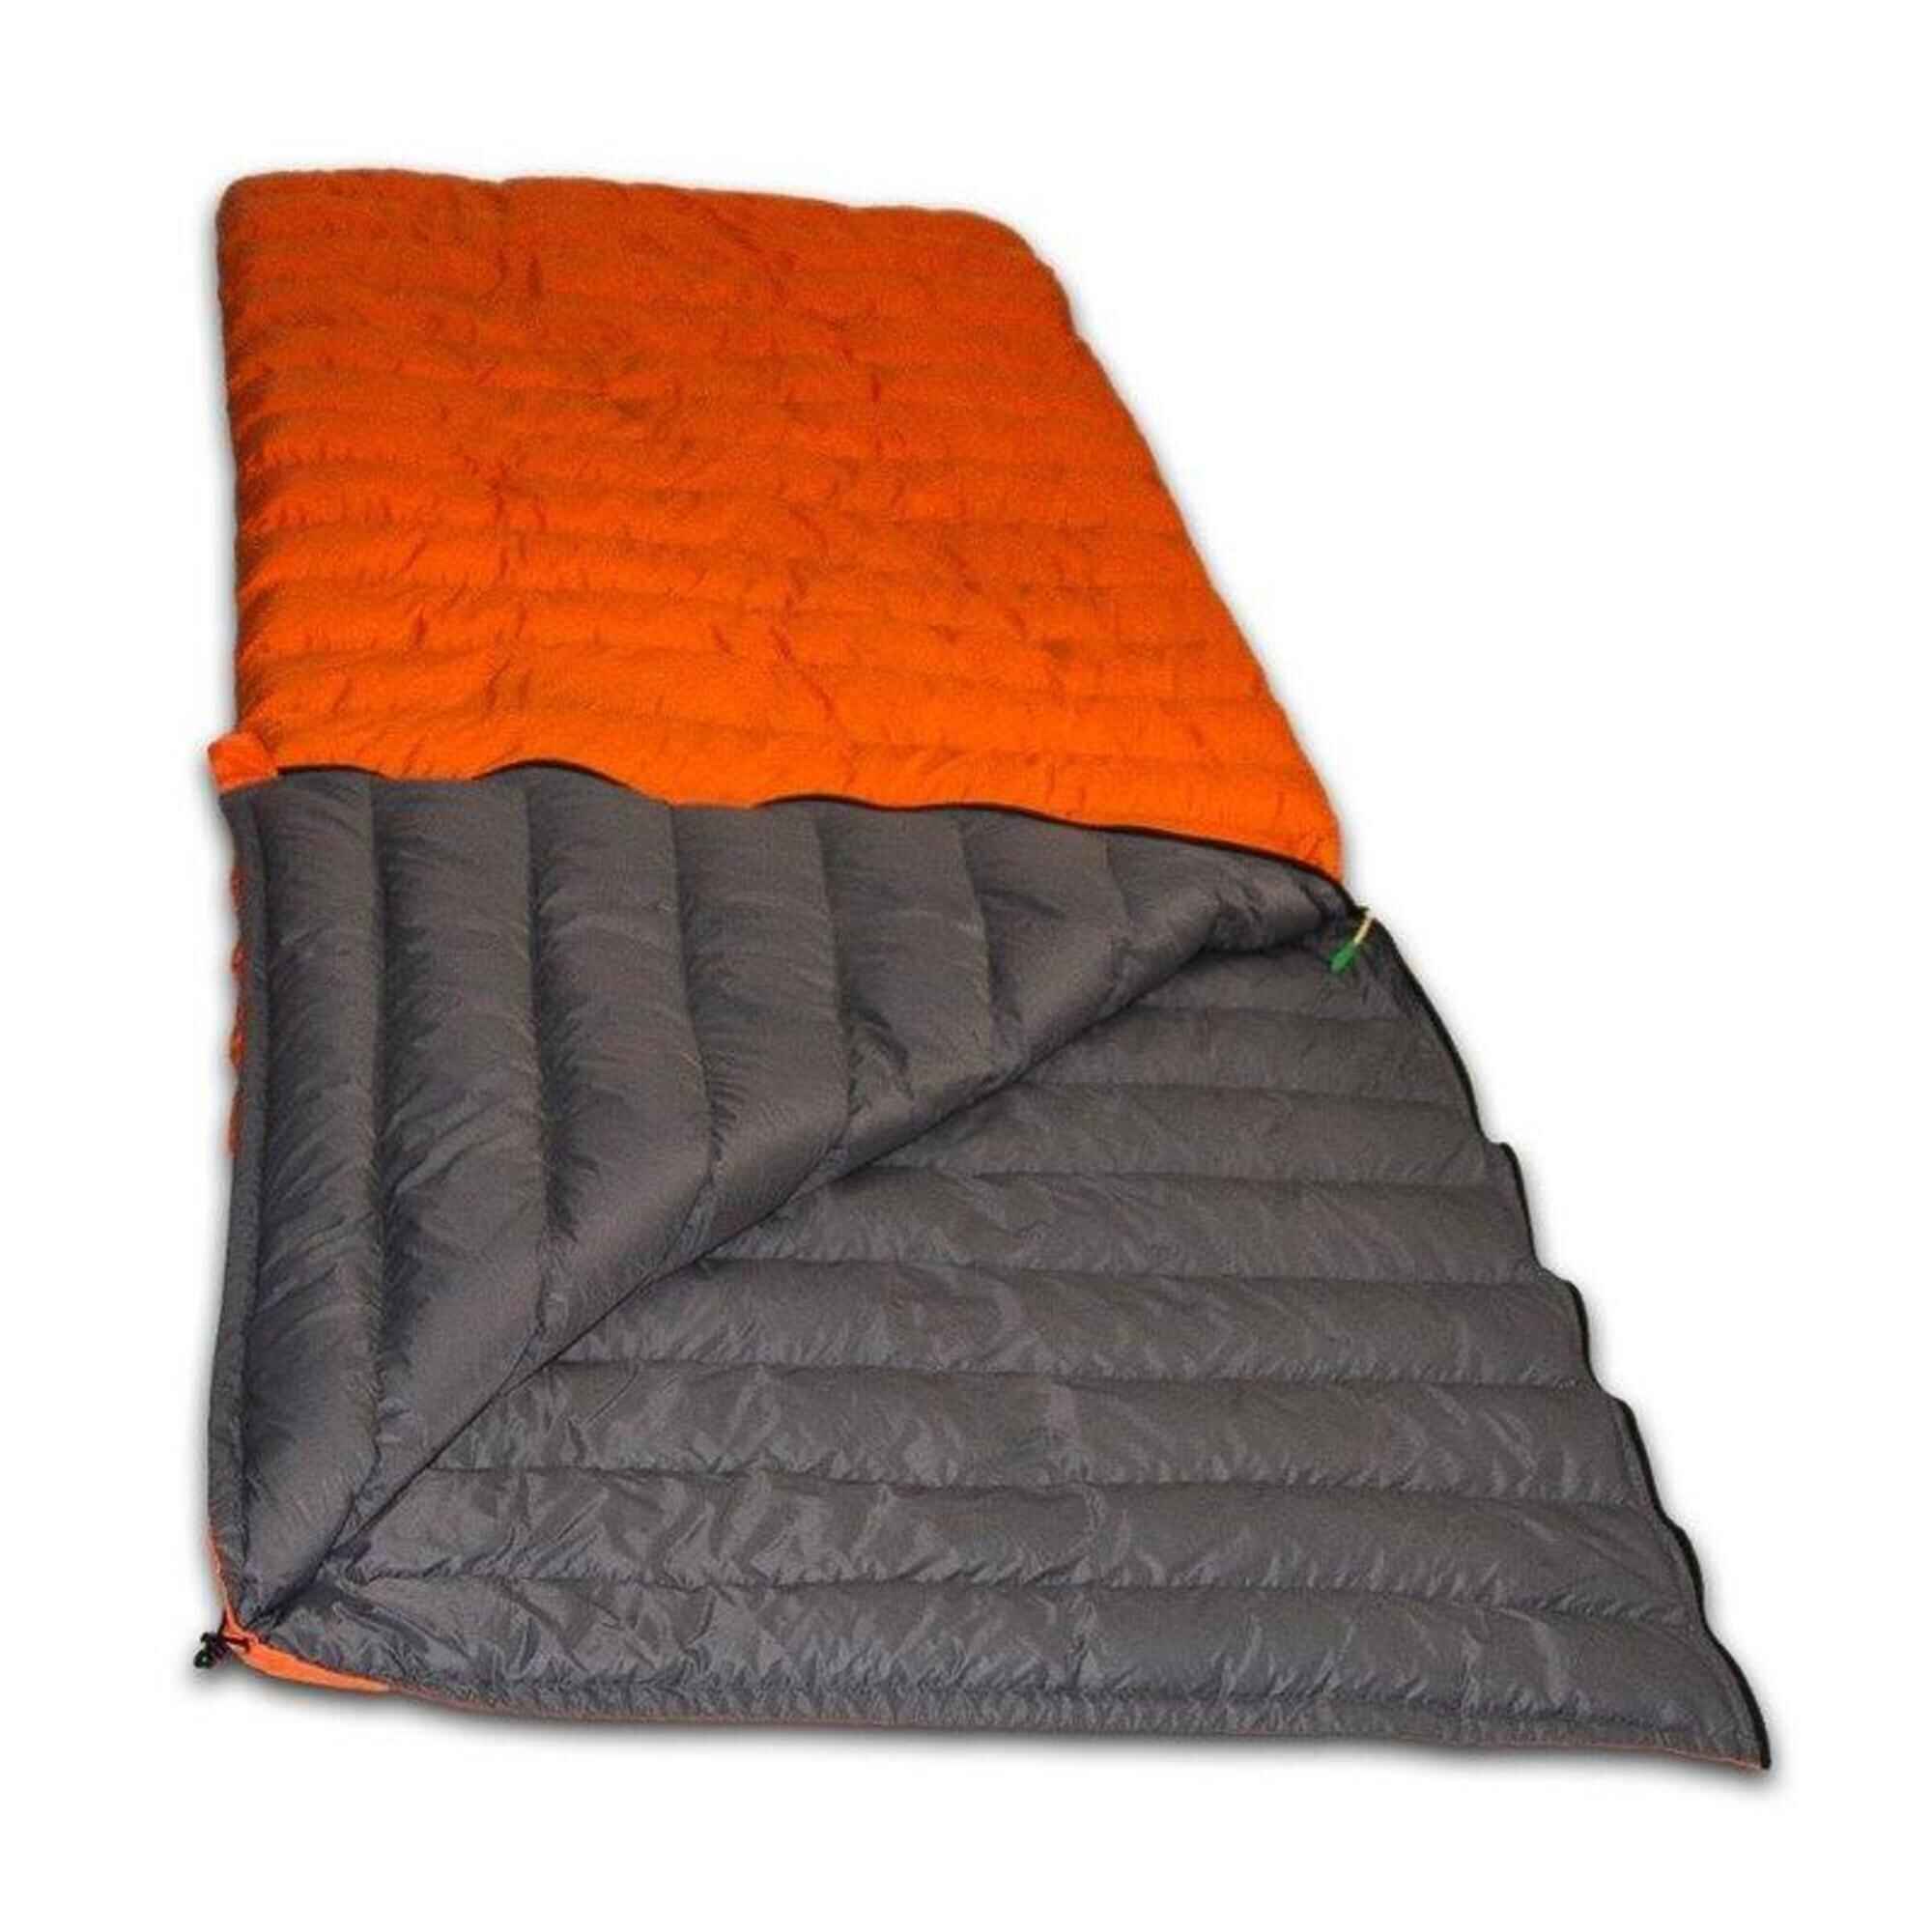 Super compact blanket-Daunendecke Schlafsack-Nylon- 210x80 cm- 590 gr. +8°C Media 1